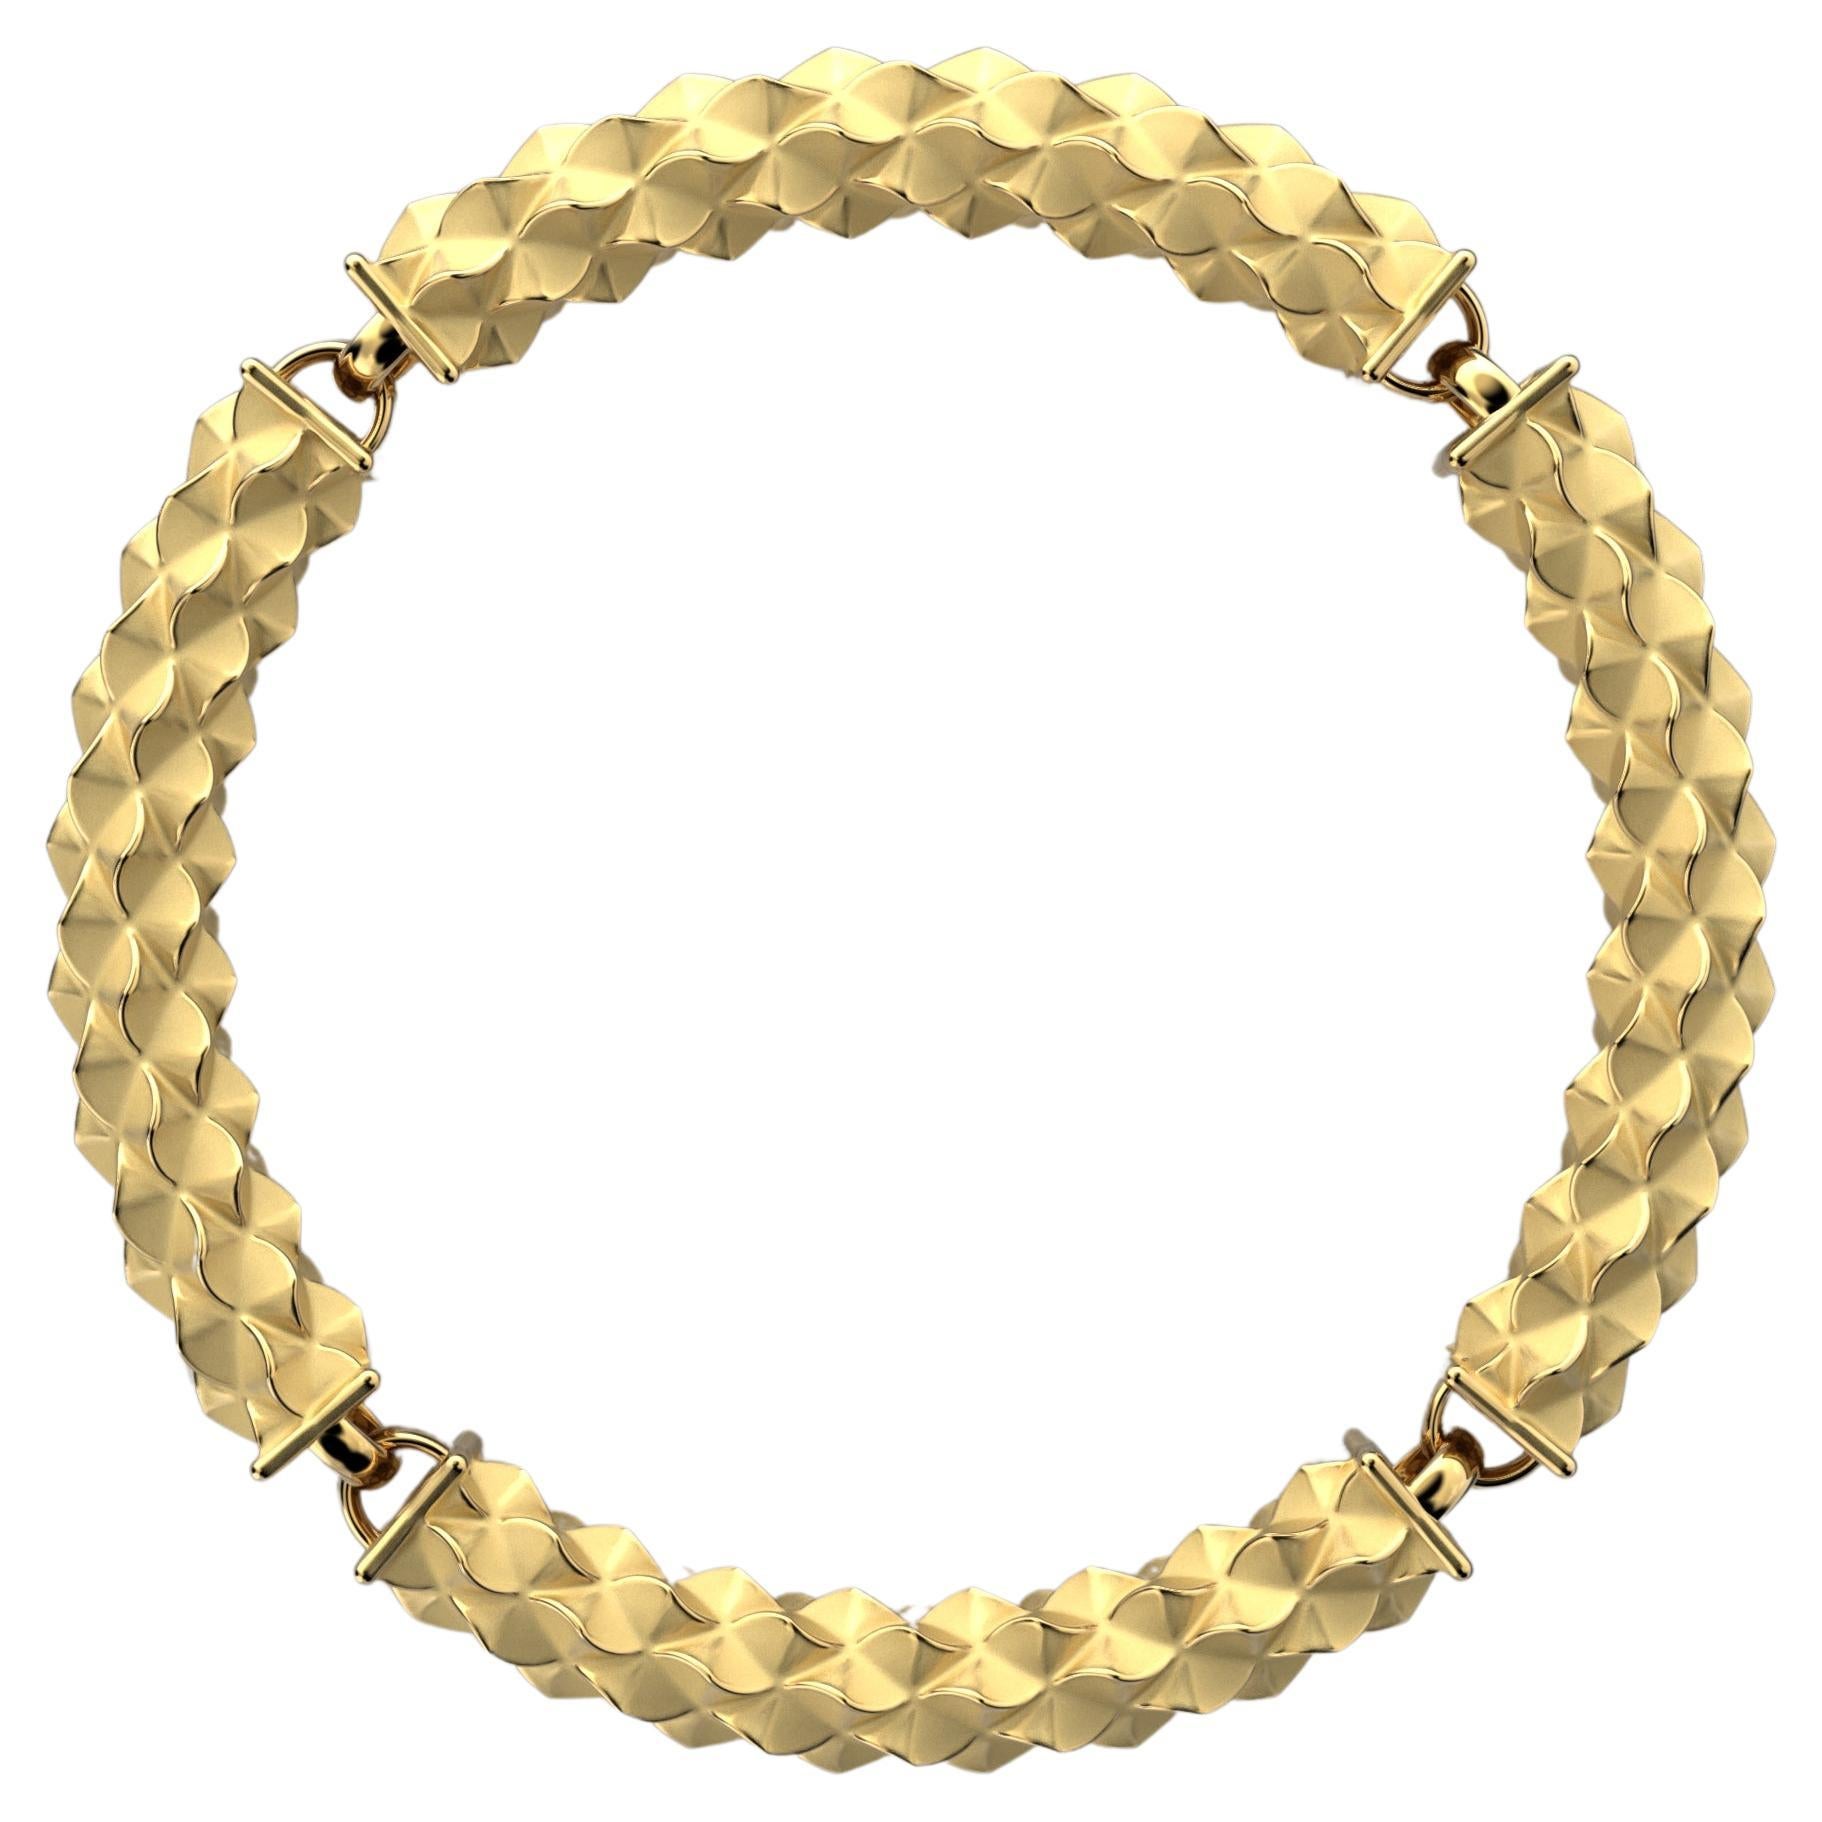 Designer italian gold bracelet in Delhi at best price by Wahi Jewellers -  Justdial